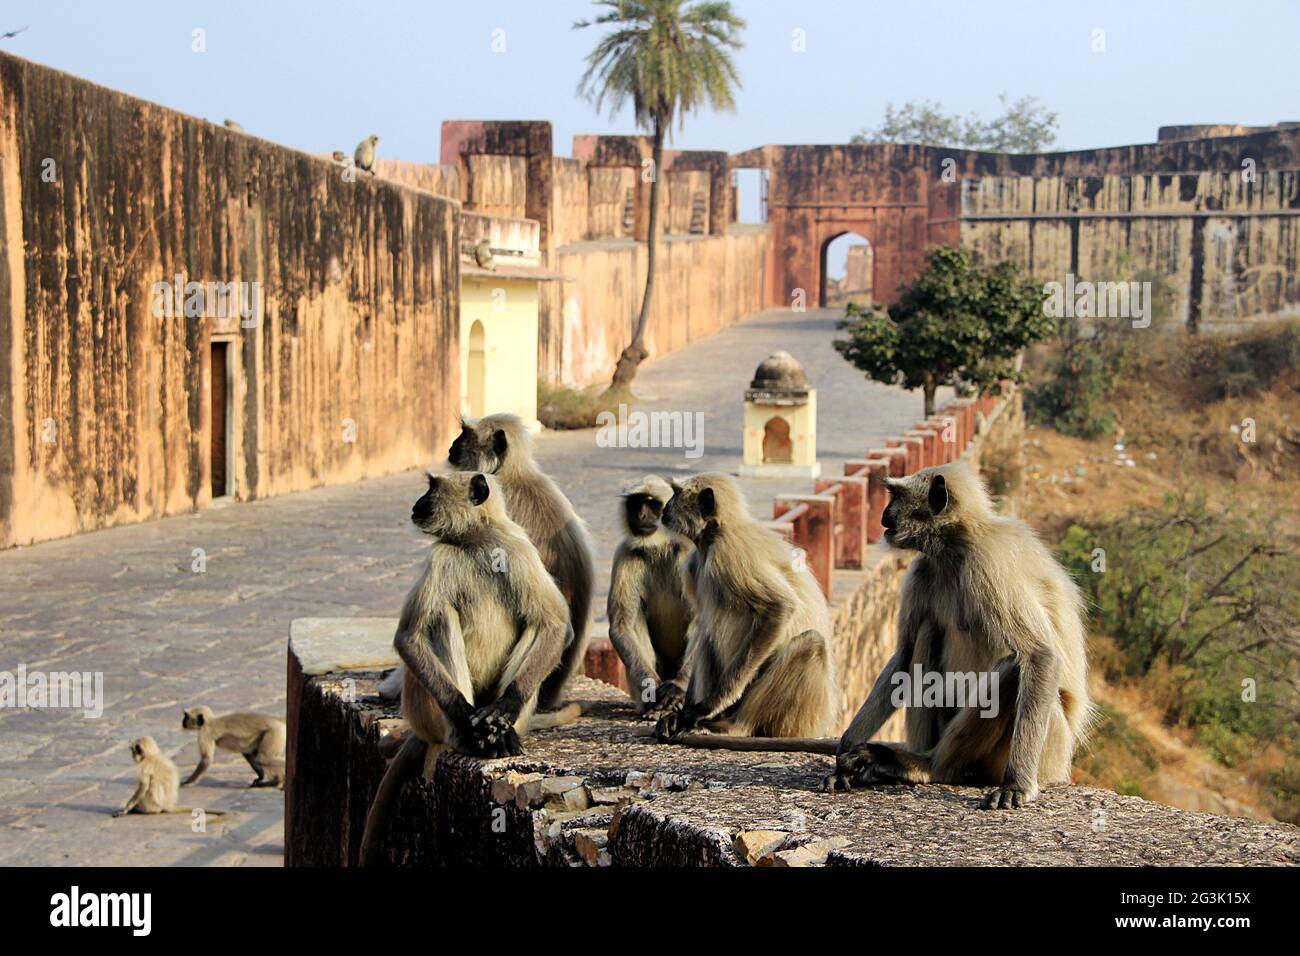 Monkeys Galore at Monument Stock Photo